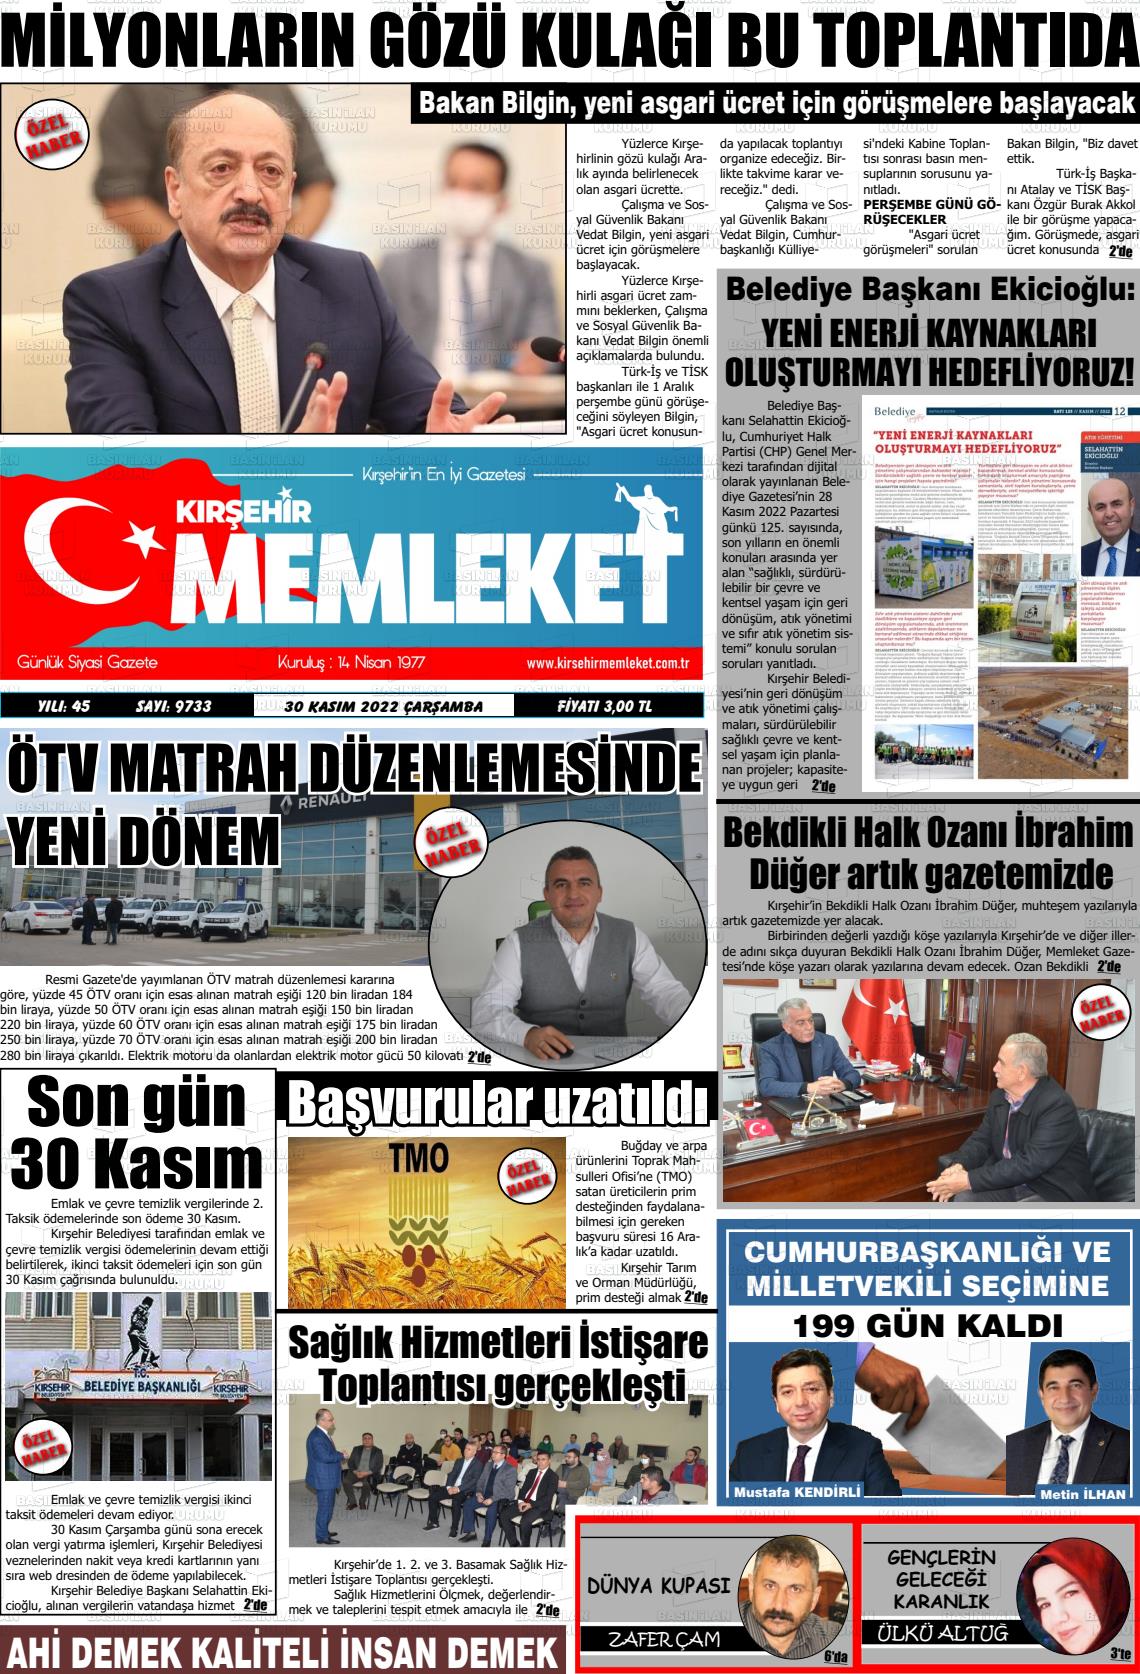 30 Kasım 2022 Kırşehir Memleket Gazete Manşeti